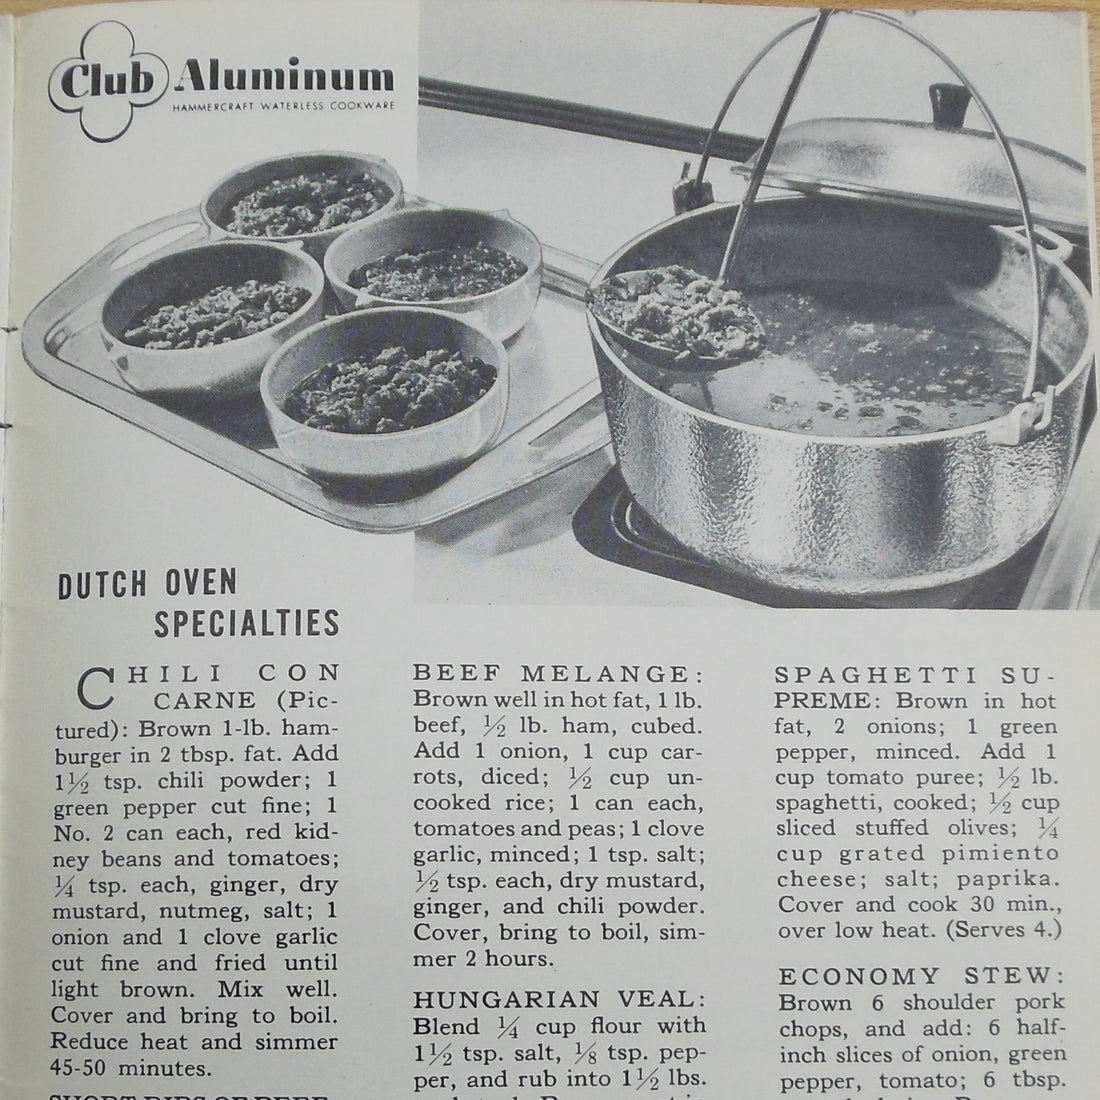 Club Hammercraft Aluminum 1950's Dutch Oven Specialties Recipes Advertising